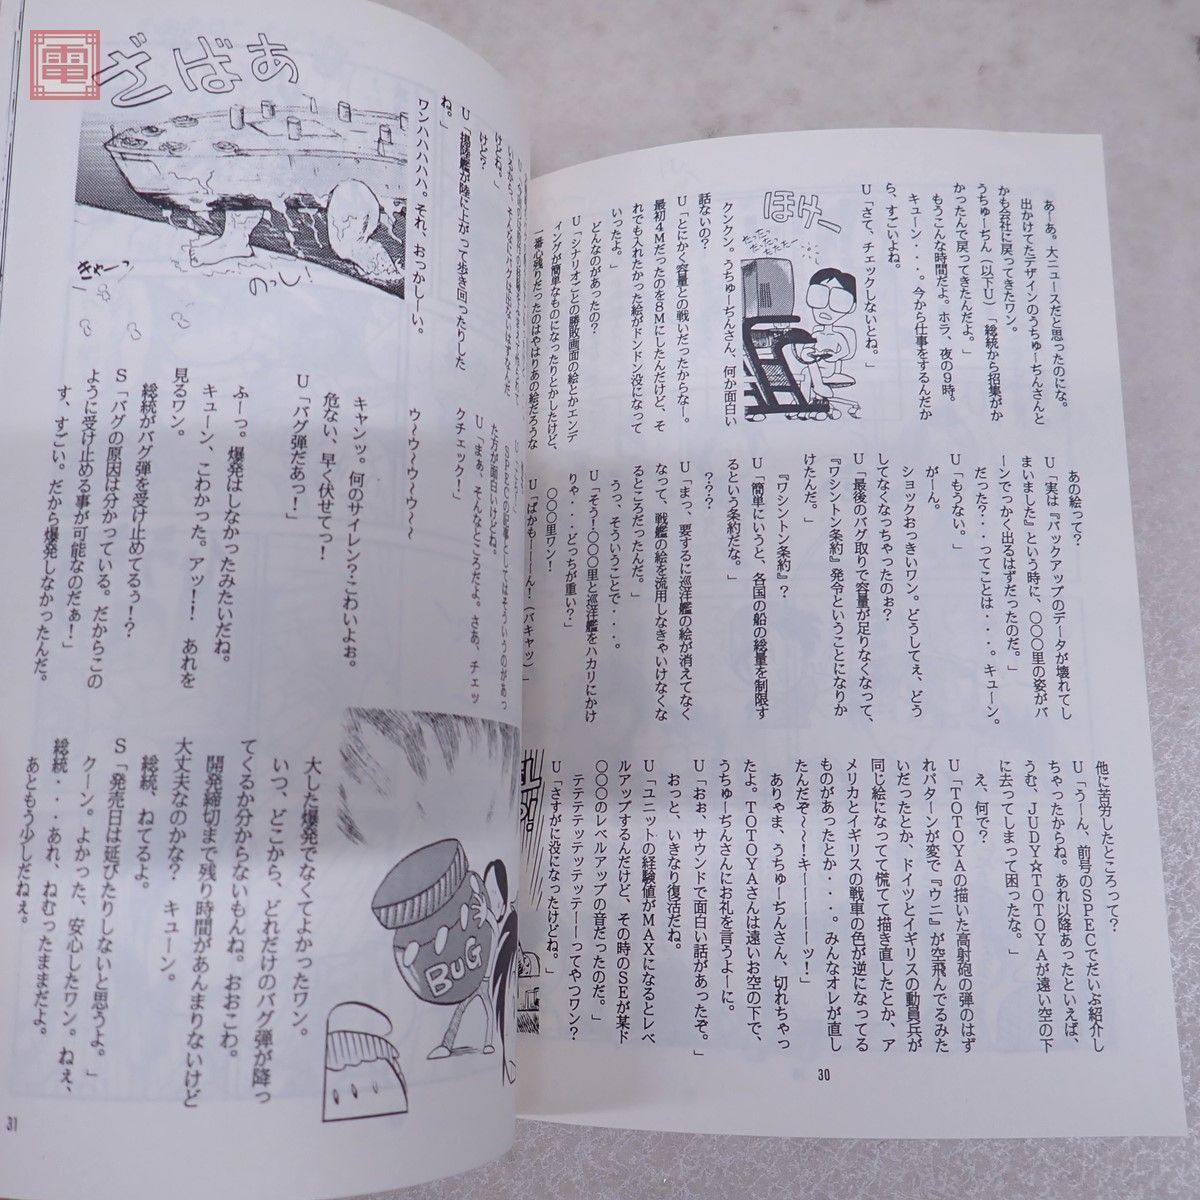  бюллетень журнал брошюра SPEC SEGA PLAYERS ENJOY CLUB VOL.0 /.. номер / 3~8 совместно комплект Mega Drive вентилятор ta ножны ta- и т.п. Sega [20